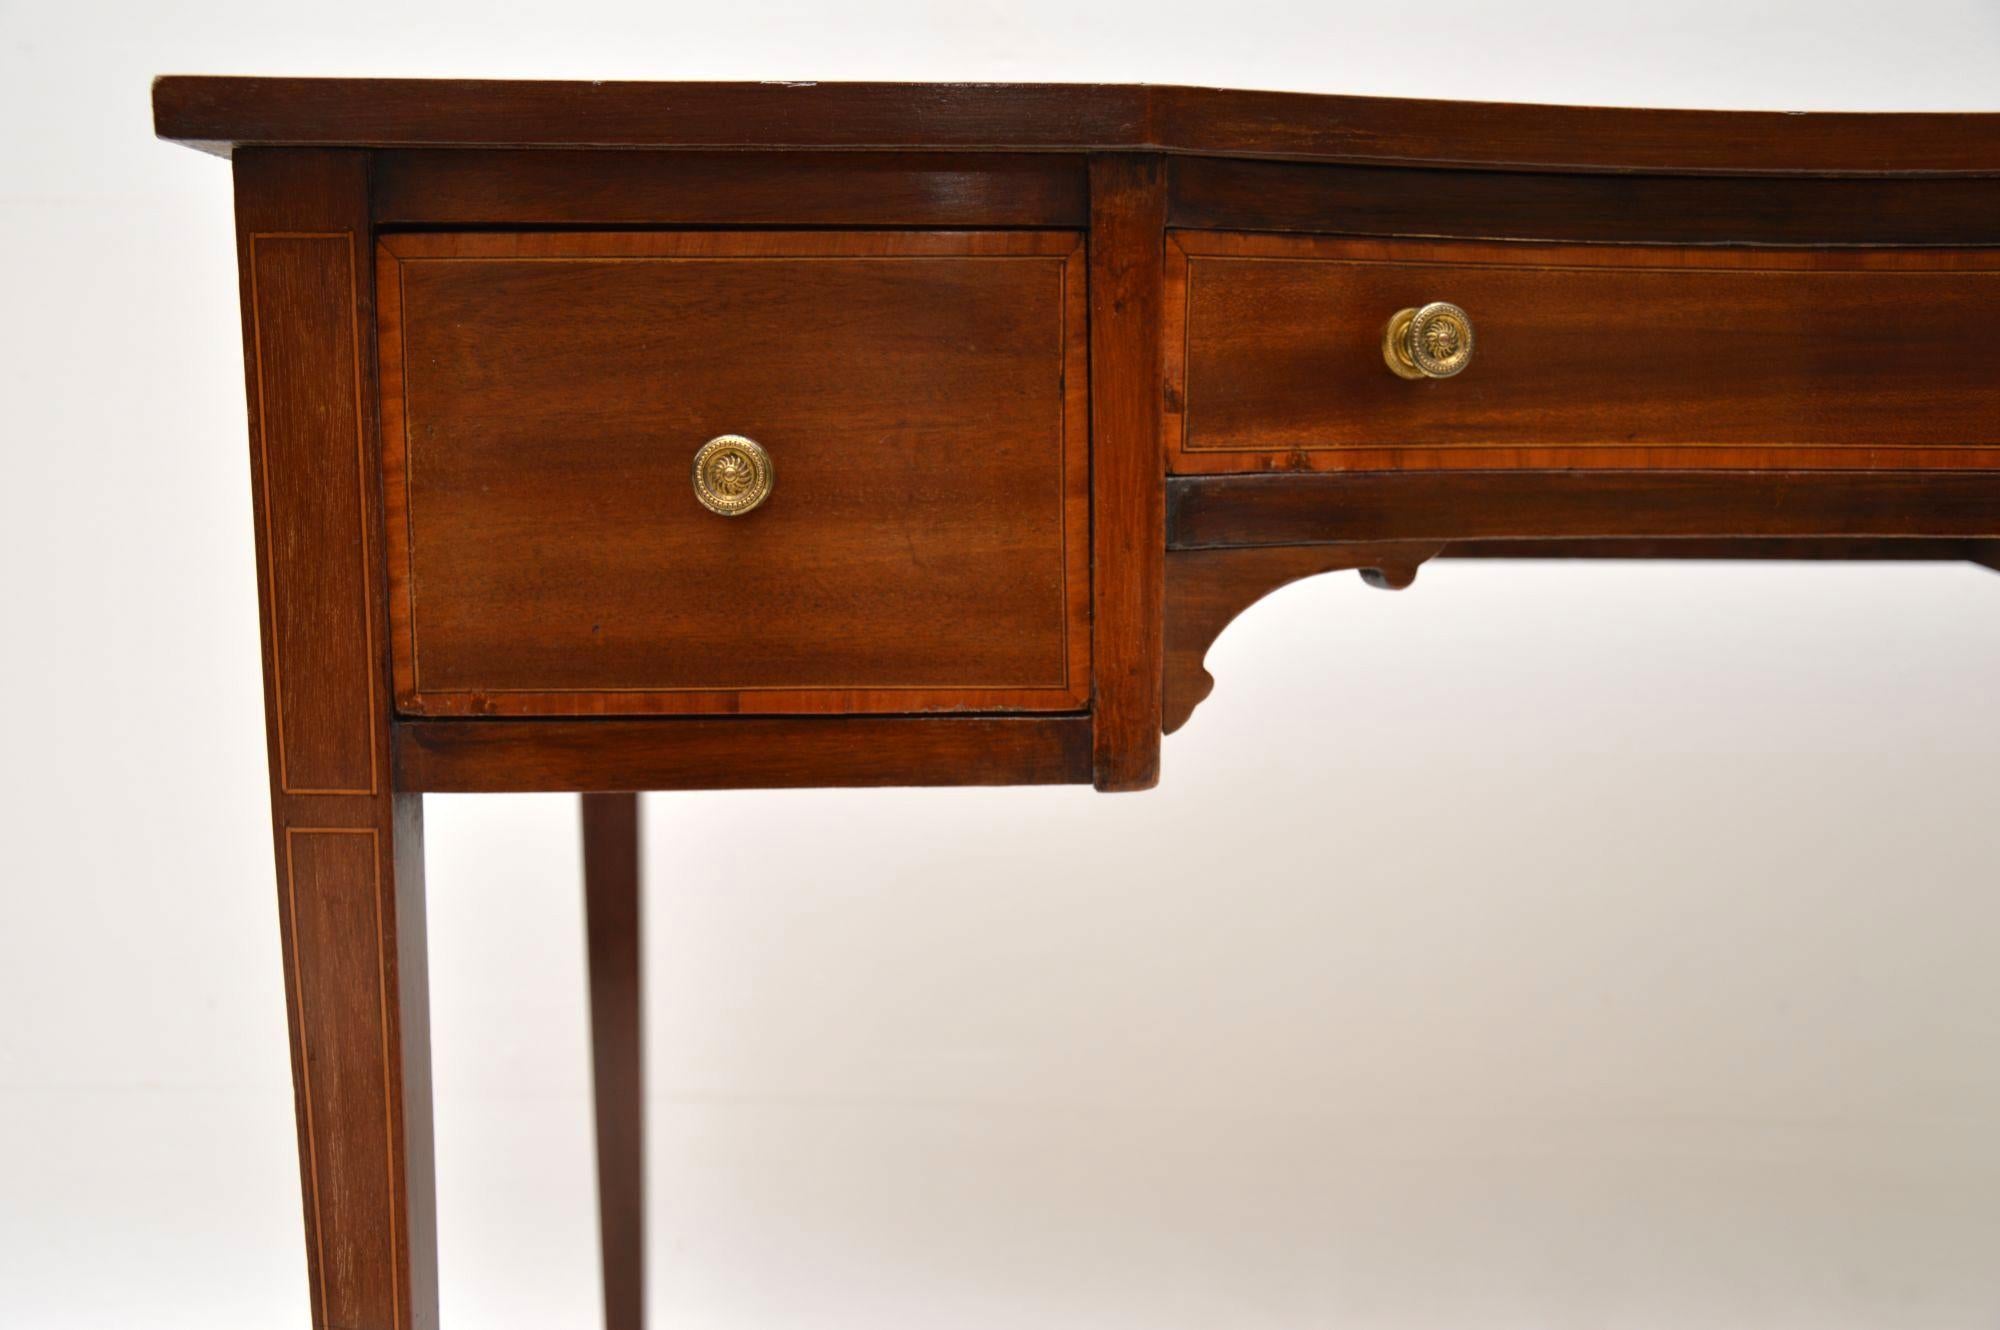 British Antique Edwardian Inlaid Mahogany Writing Table or Desk